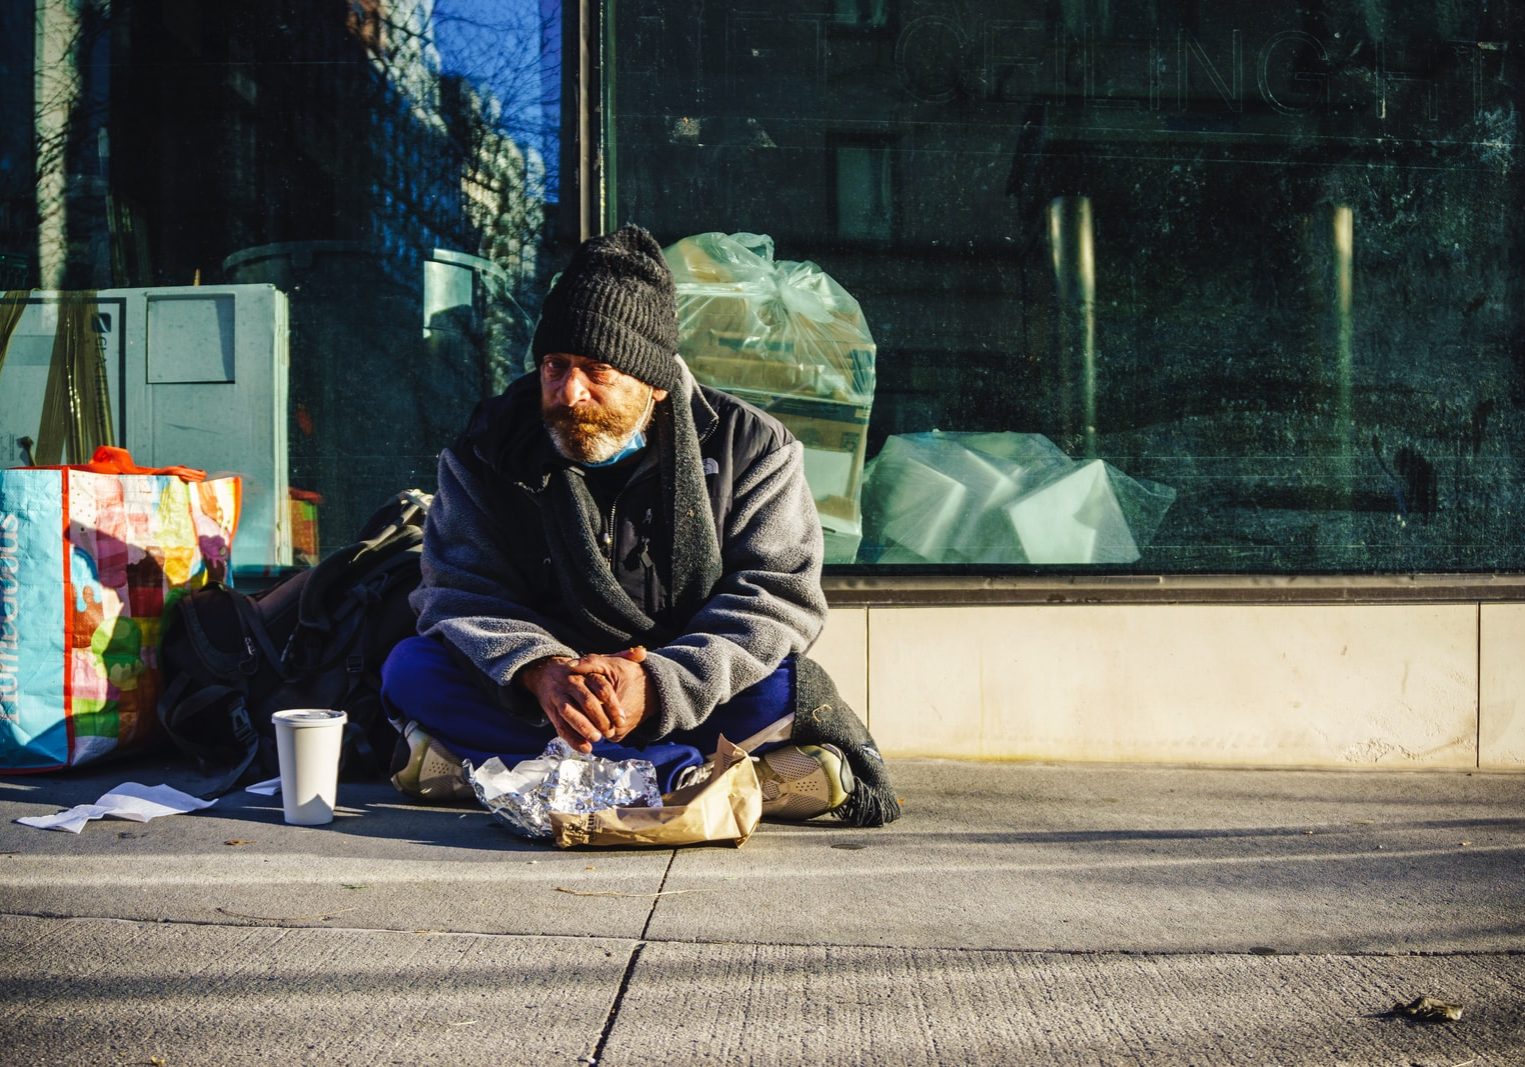 man in black and gray jacket sitting on sidewalk during daytime